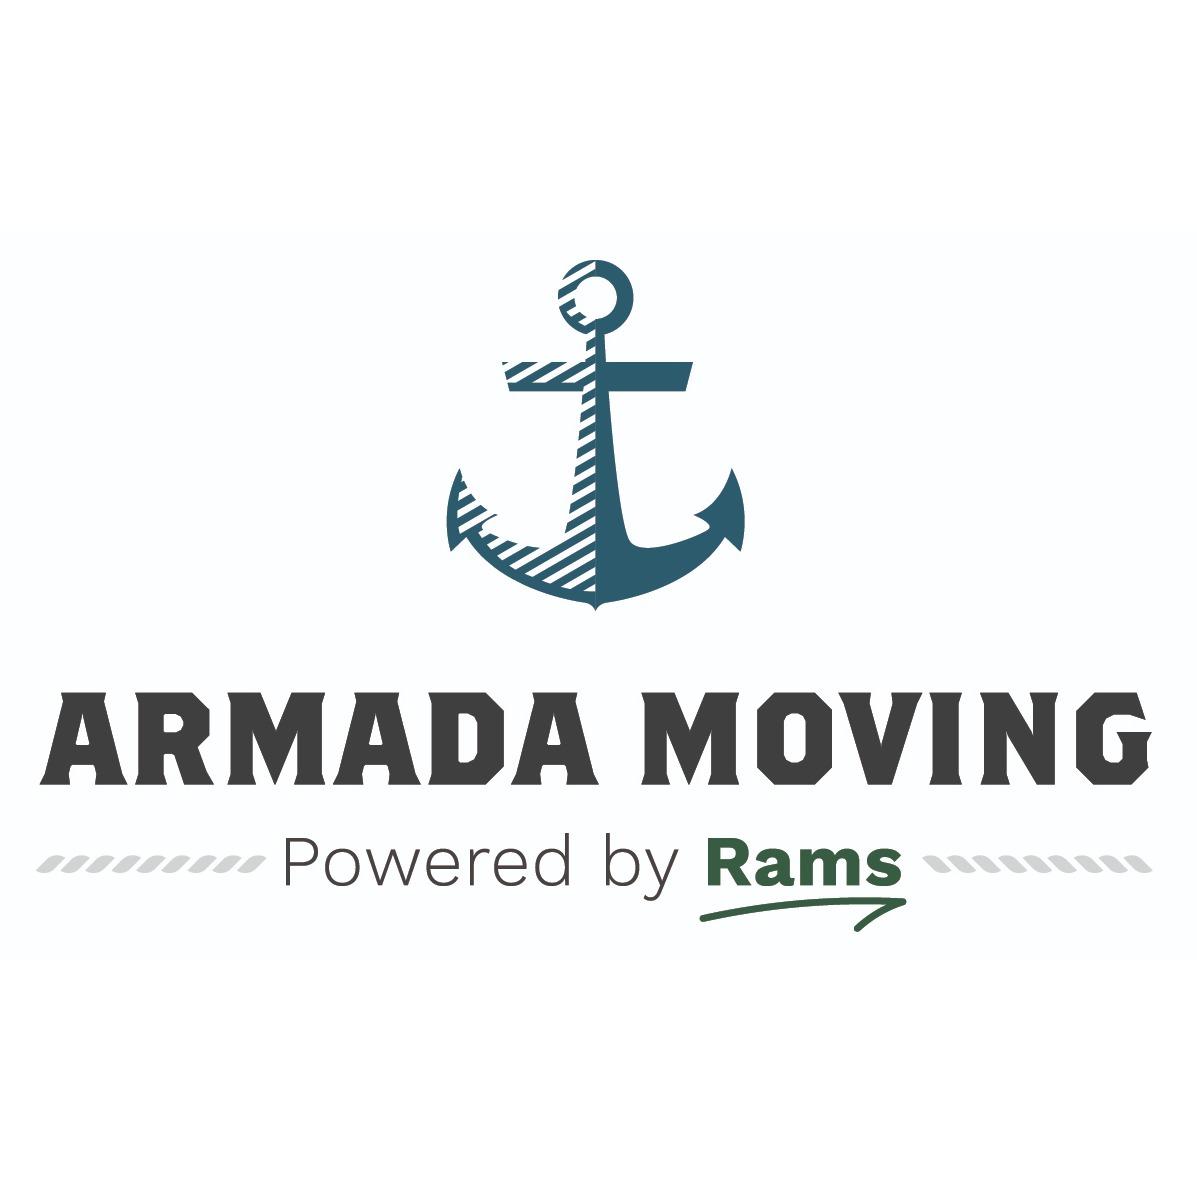 Armada Moving Company - Fort Collins, CO 80524 - (970)541-3023 | ShowMeLocal.com